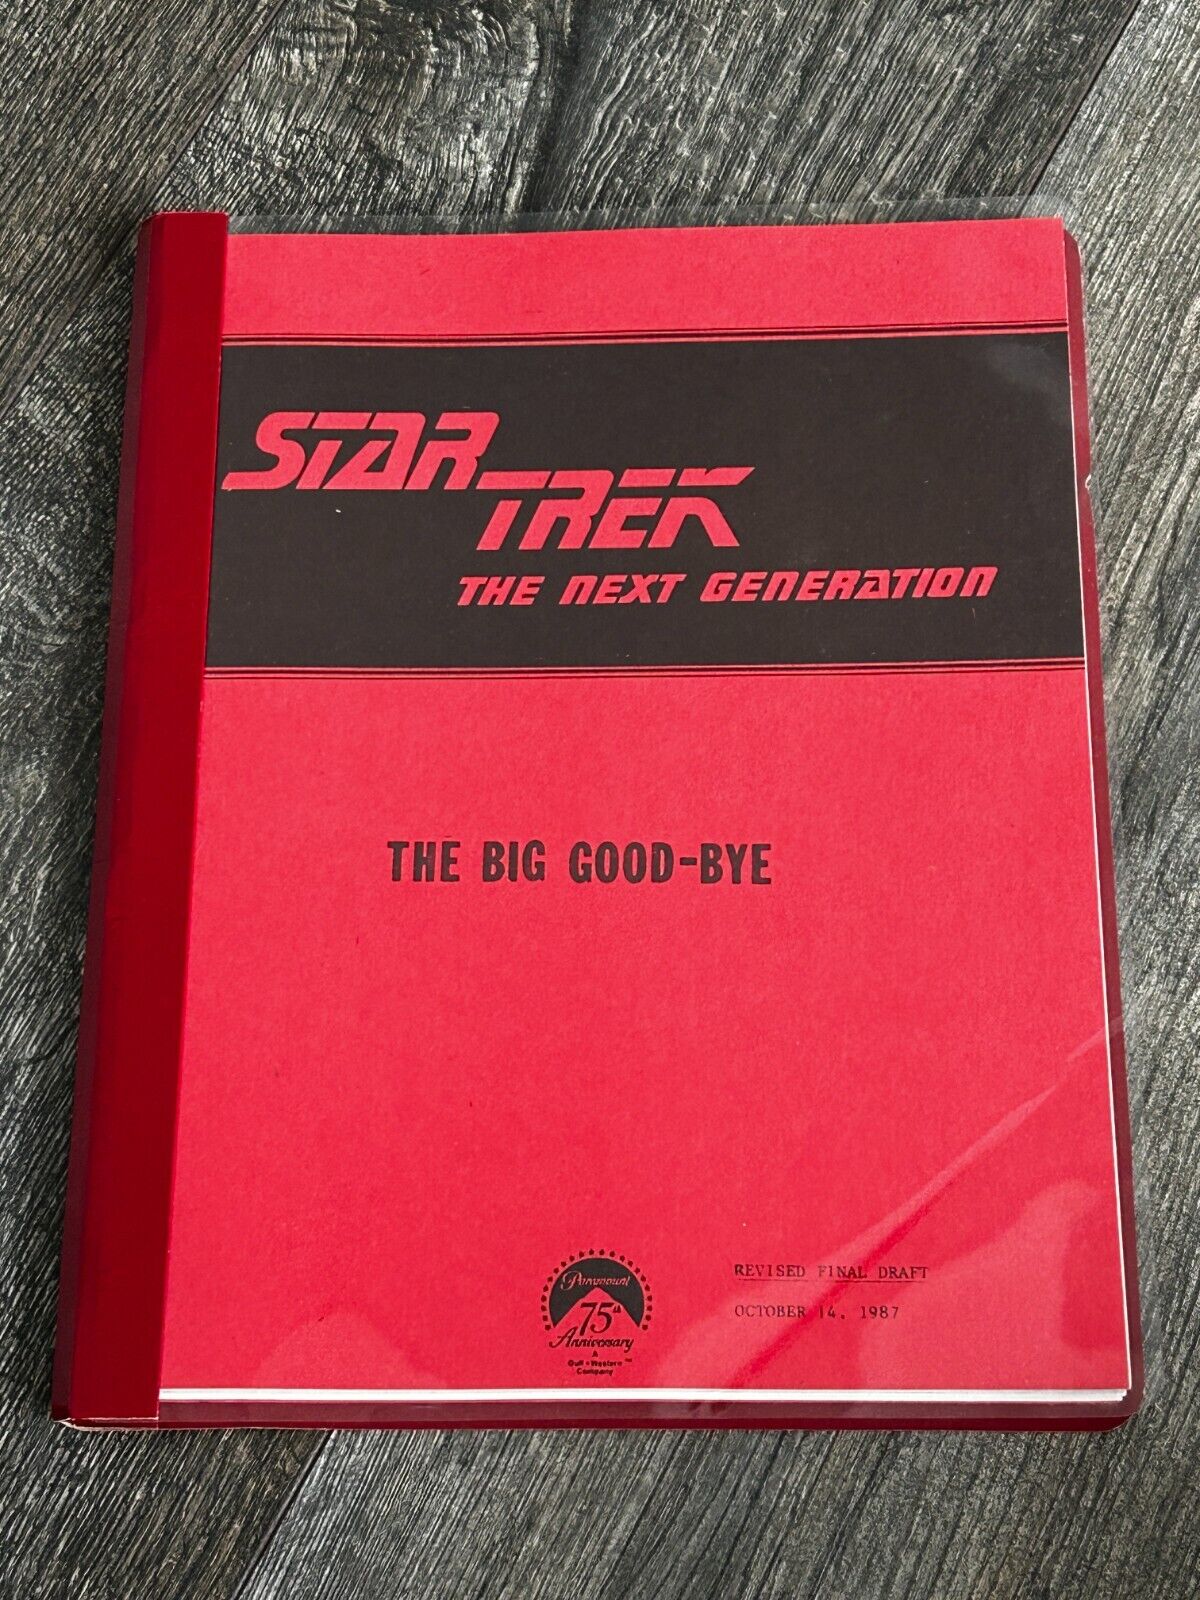 STAR TREK Script The Next Generation The Big Good-Bye Revised Final Draft 1987